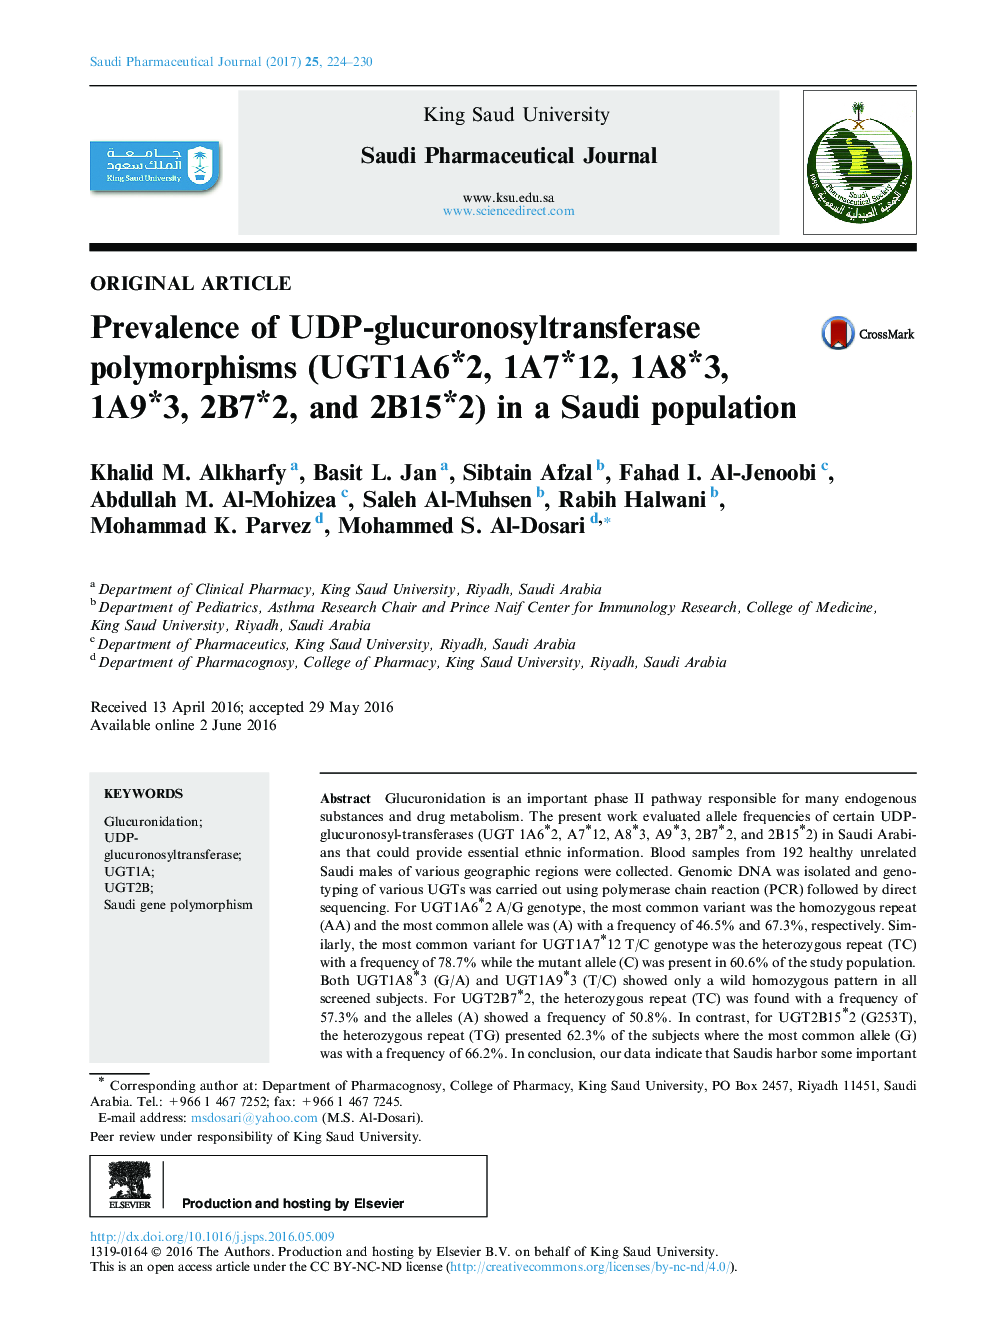 Prevalence of UDP-glucuronosyltransferase polymorphisms (UGT1A6â2, 1A7â12, 1A8â3, 1A9â3, 2B7â2, and 2B15â2) in a Saudi population